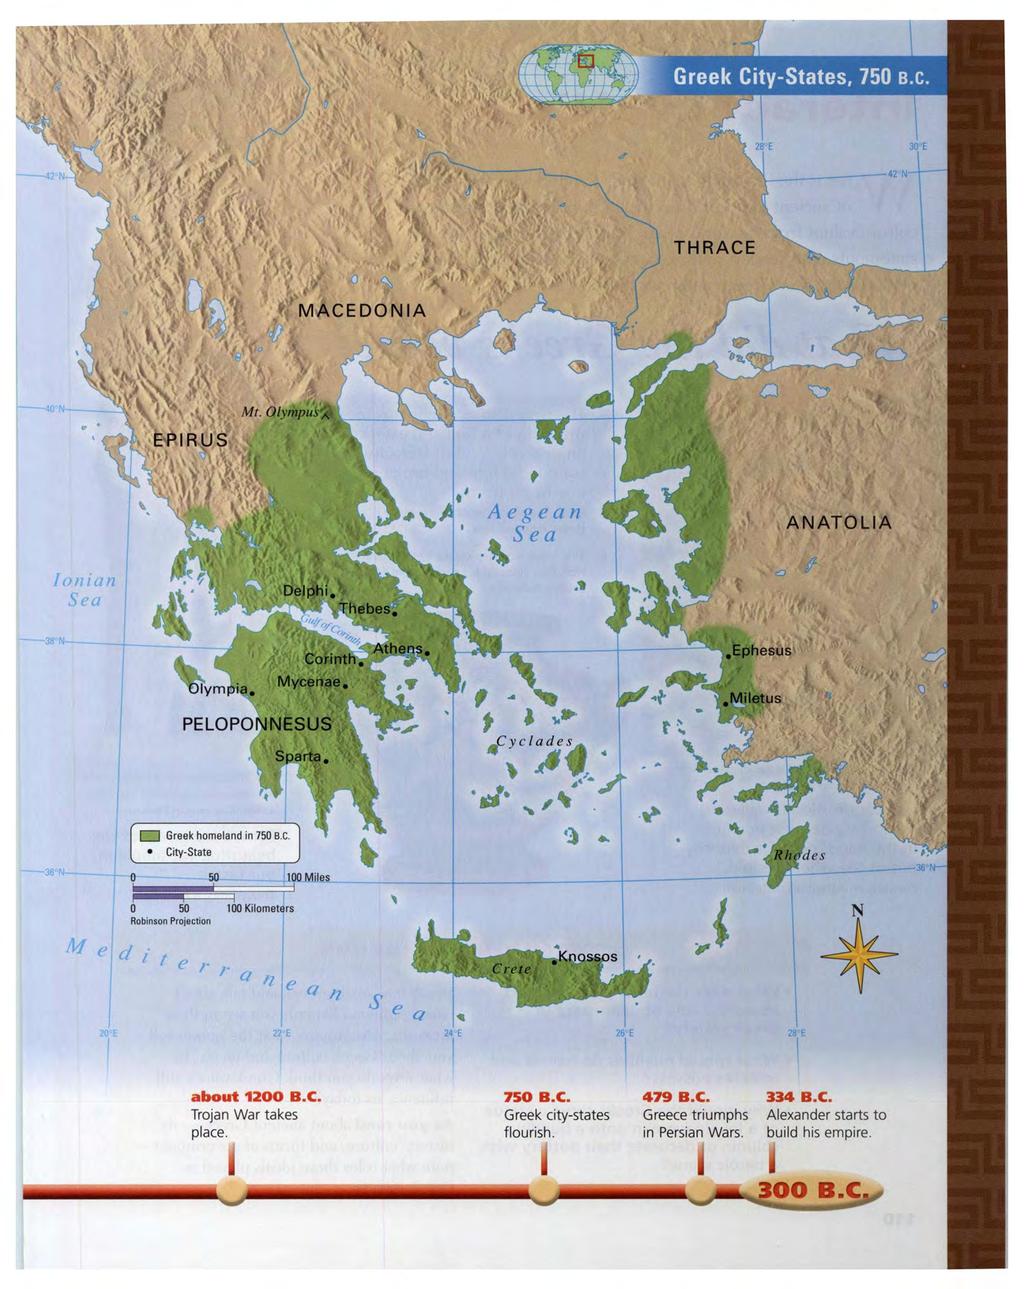 THRACE -40`N-- Aegean Sea ANATOLIA Ionian Sea Delphi. Thebes, --38 N- Olympia, Lorinin, Mycenae, Athens_,Ephesus Miletus PELOPONNESUS 1 % Sparta, Greek homeland in 750 B.C. City-State ^11A 0 50 100 Miles 0 50 100 Kilometers Robinson Projection I e I-,.